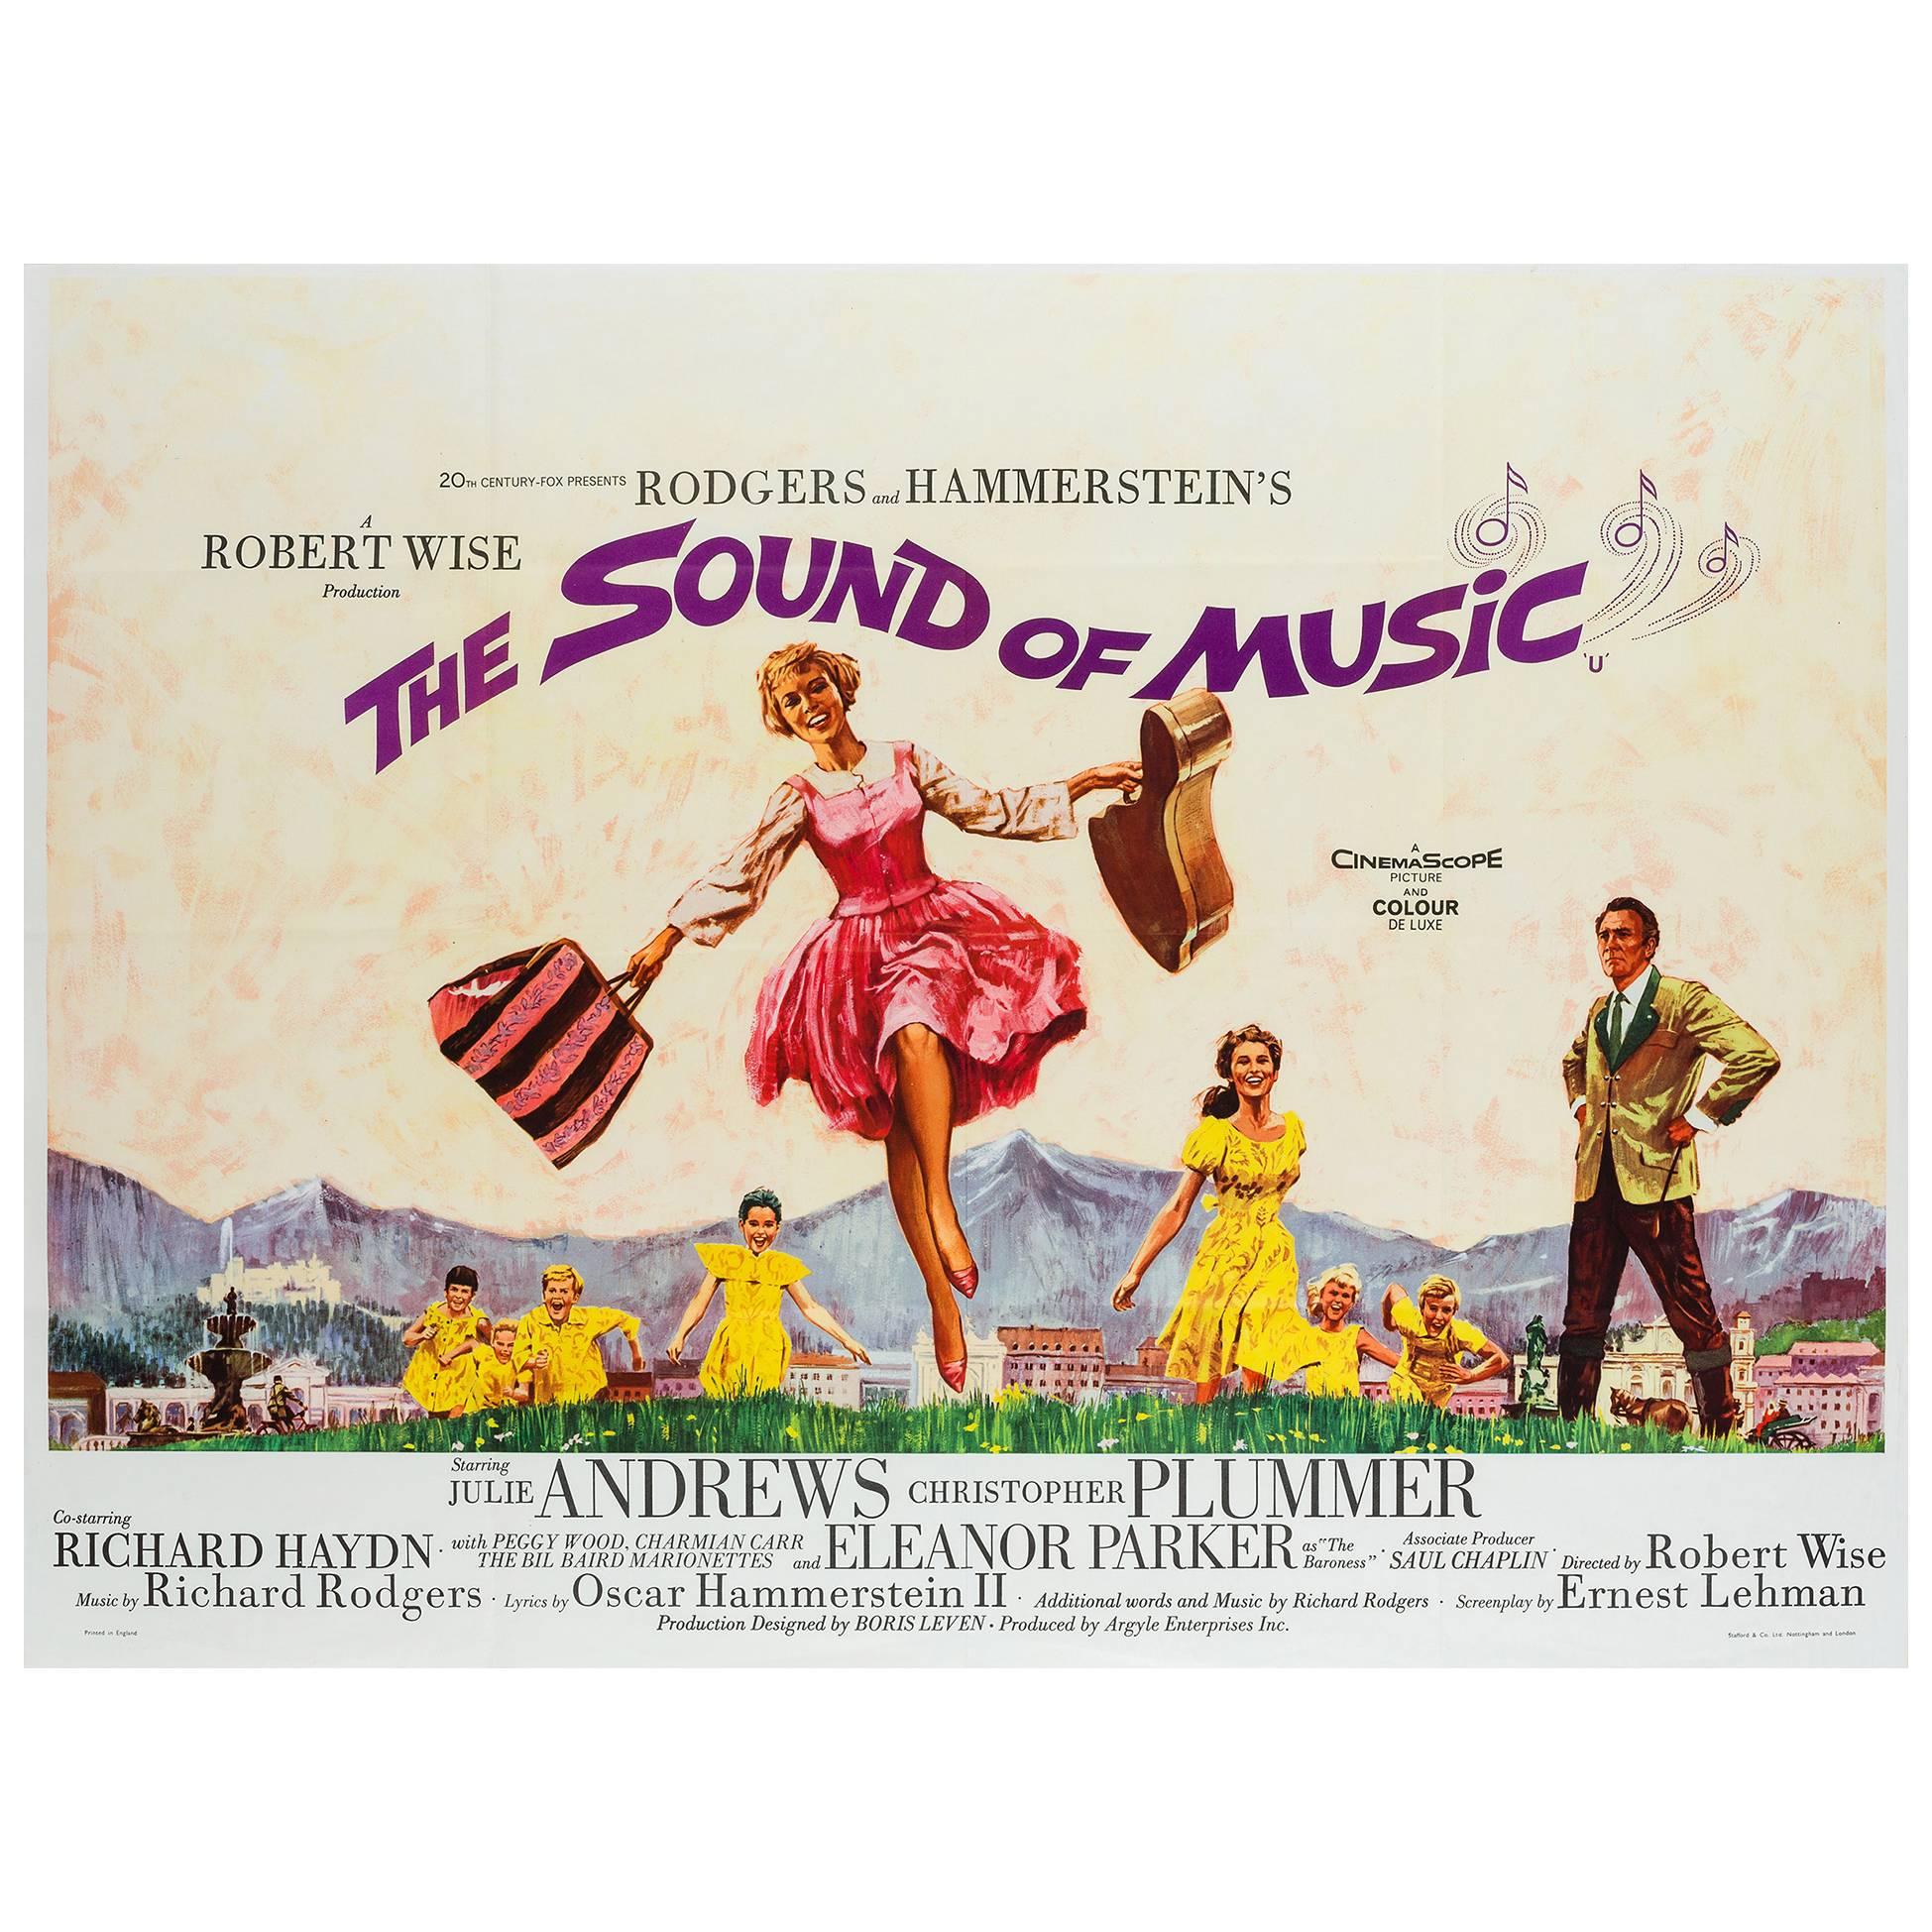 "The Sound of Music" Original UK Film Poster, Howard Terpning, 1965